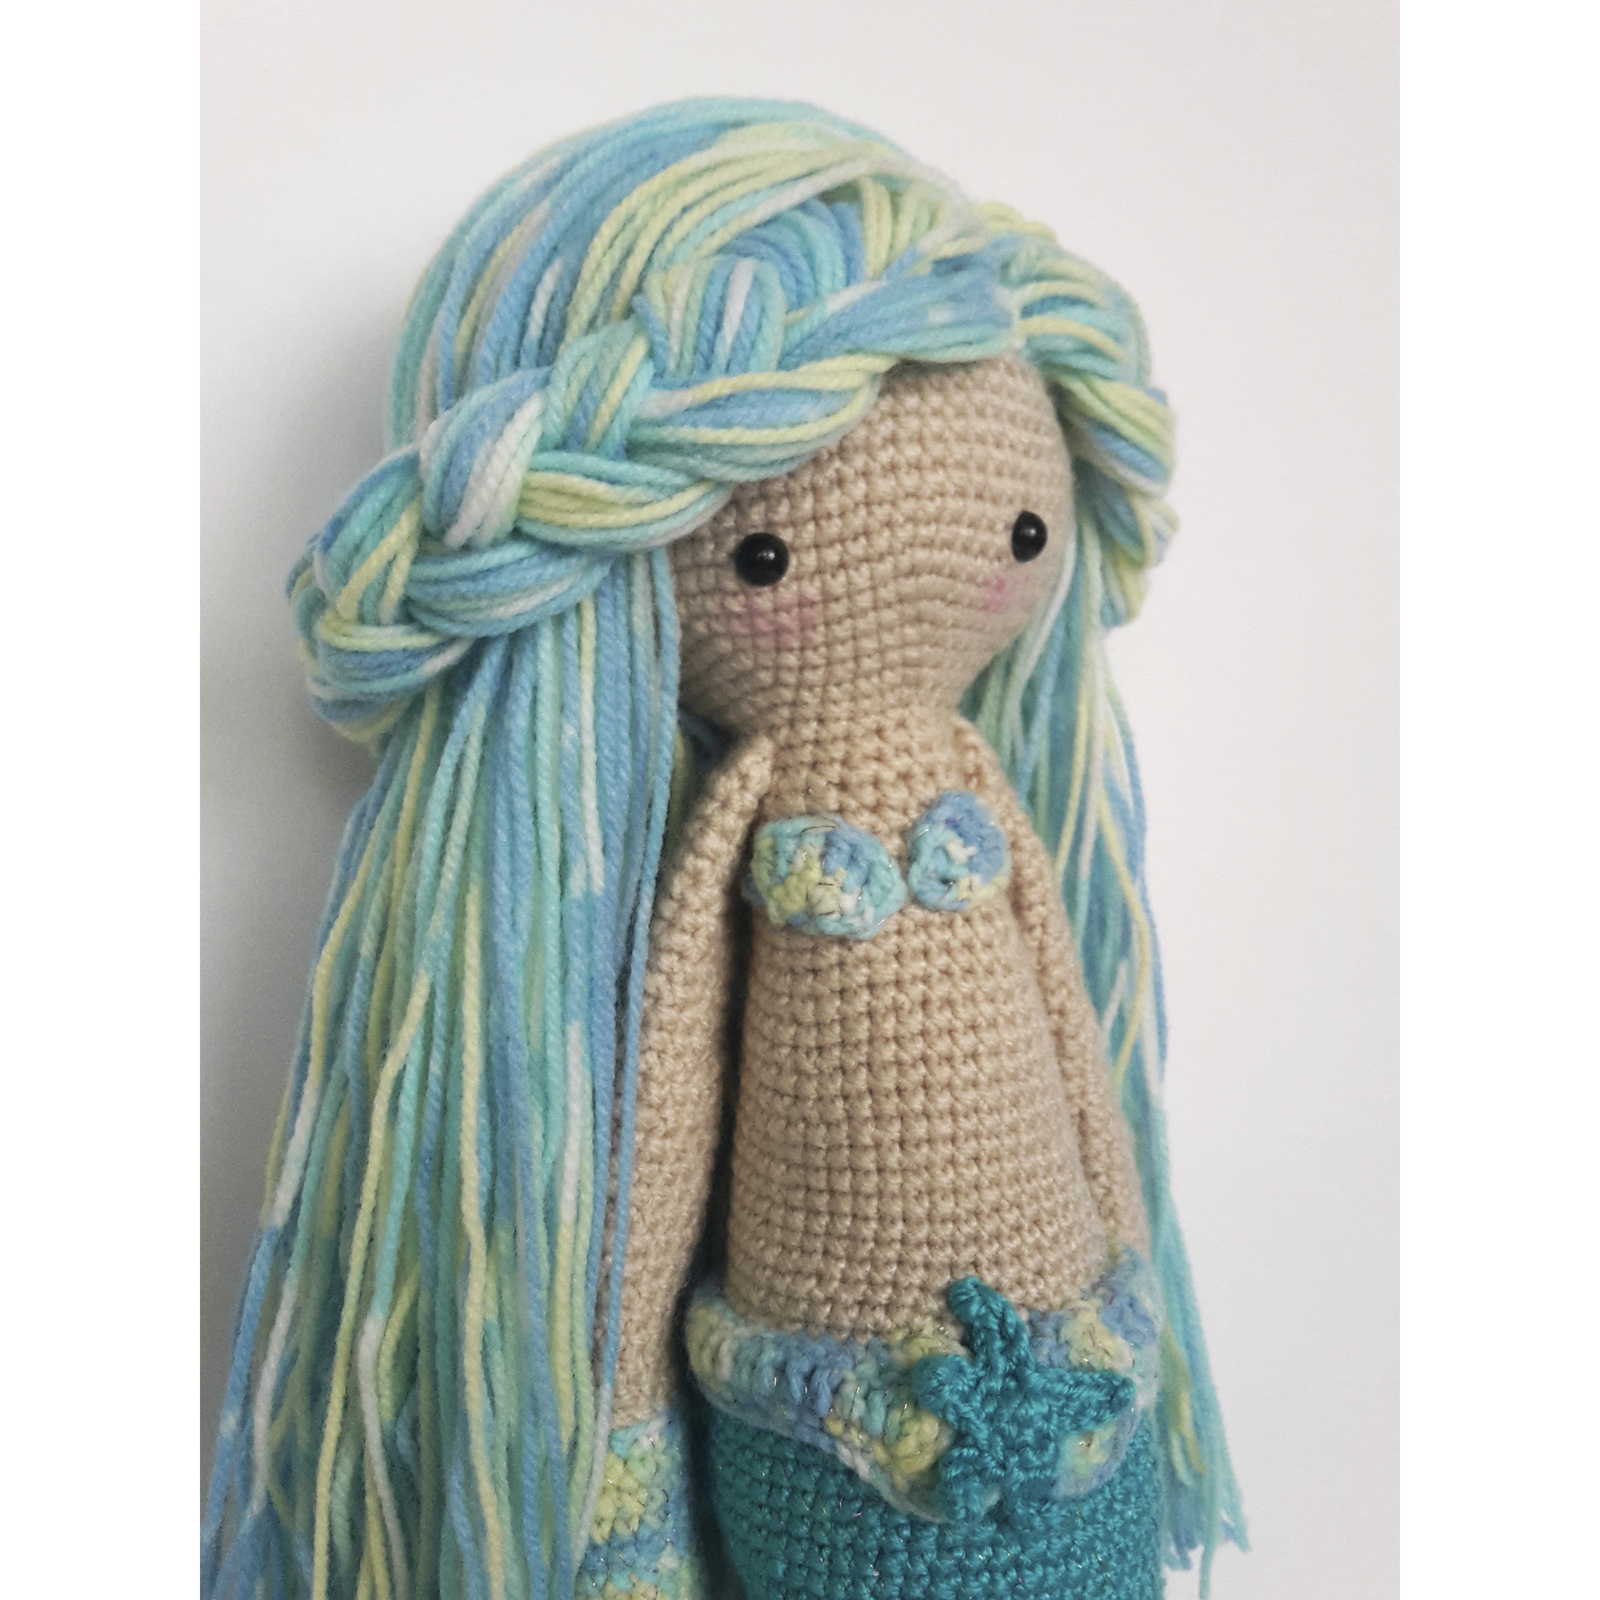 Knitted toy Mermaid in Lalylala style - Longpost, Knitting, Doll, Crochet, Mermaid, Needlework without process, Needlemen, My